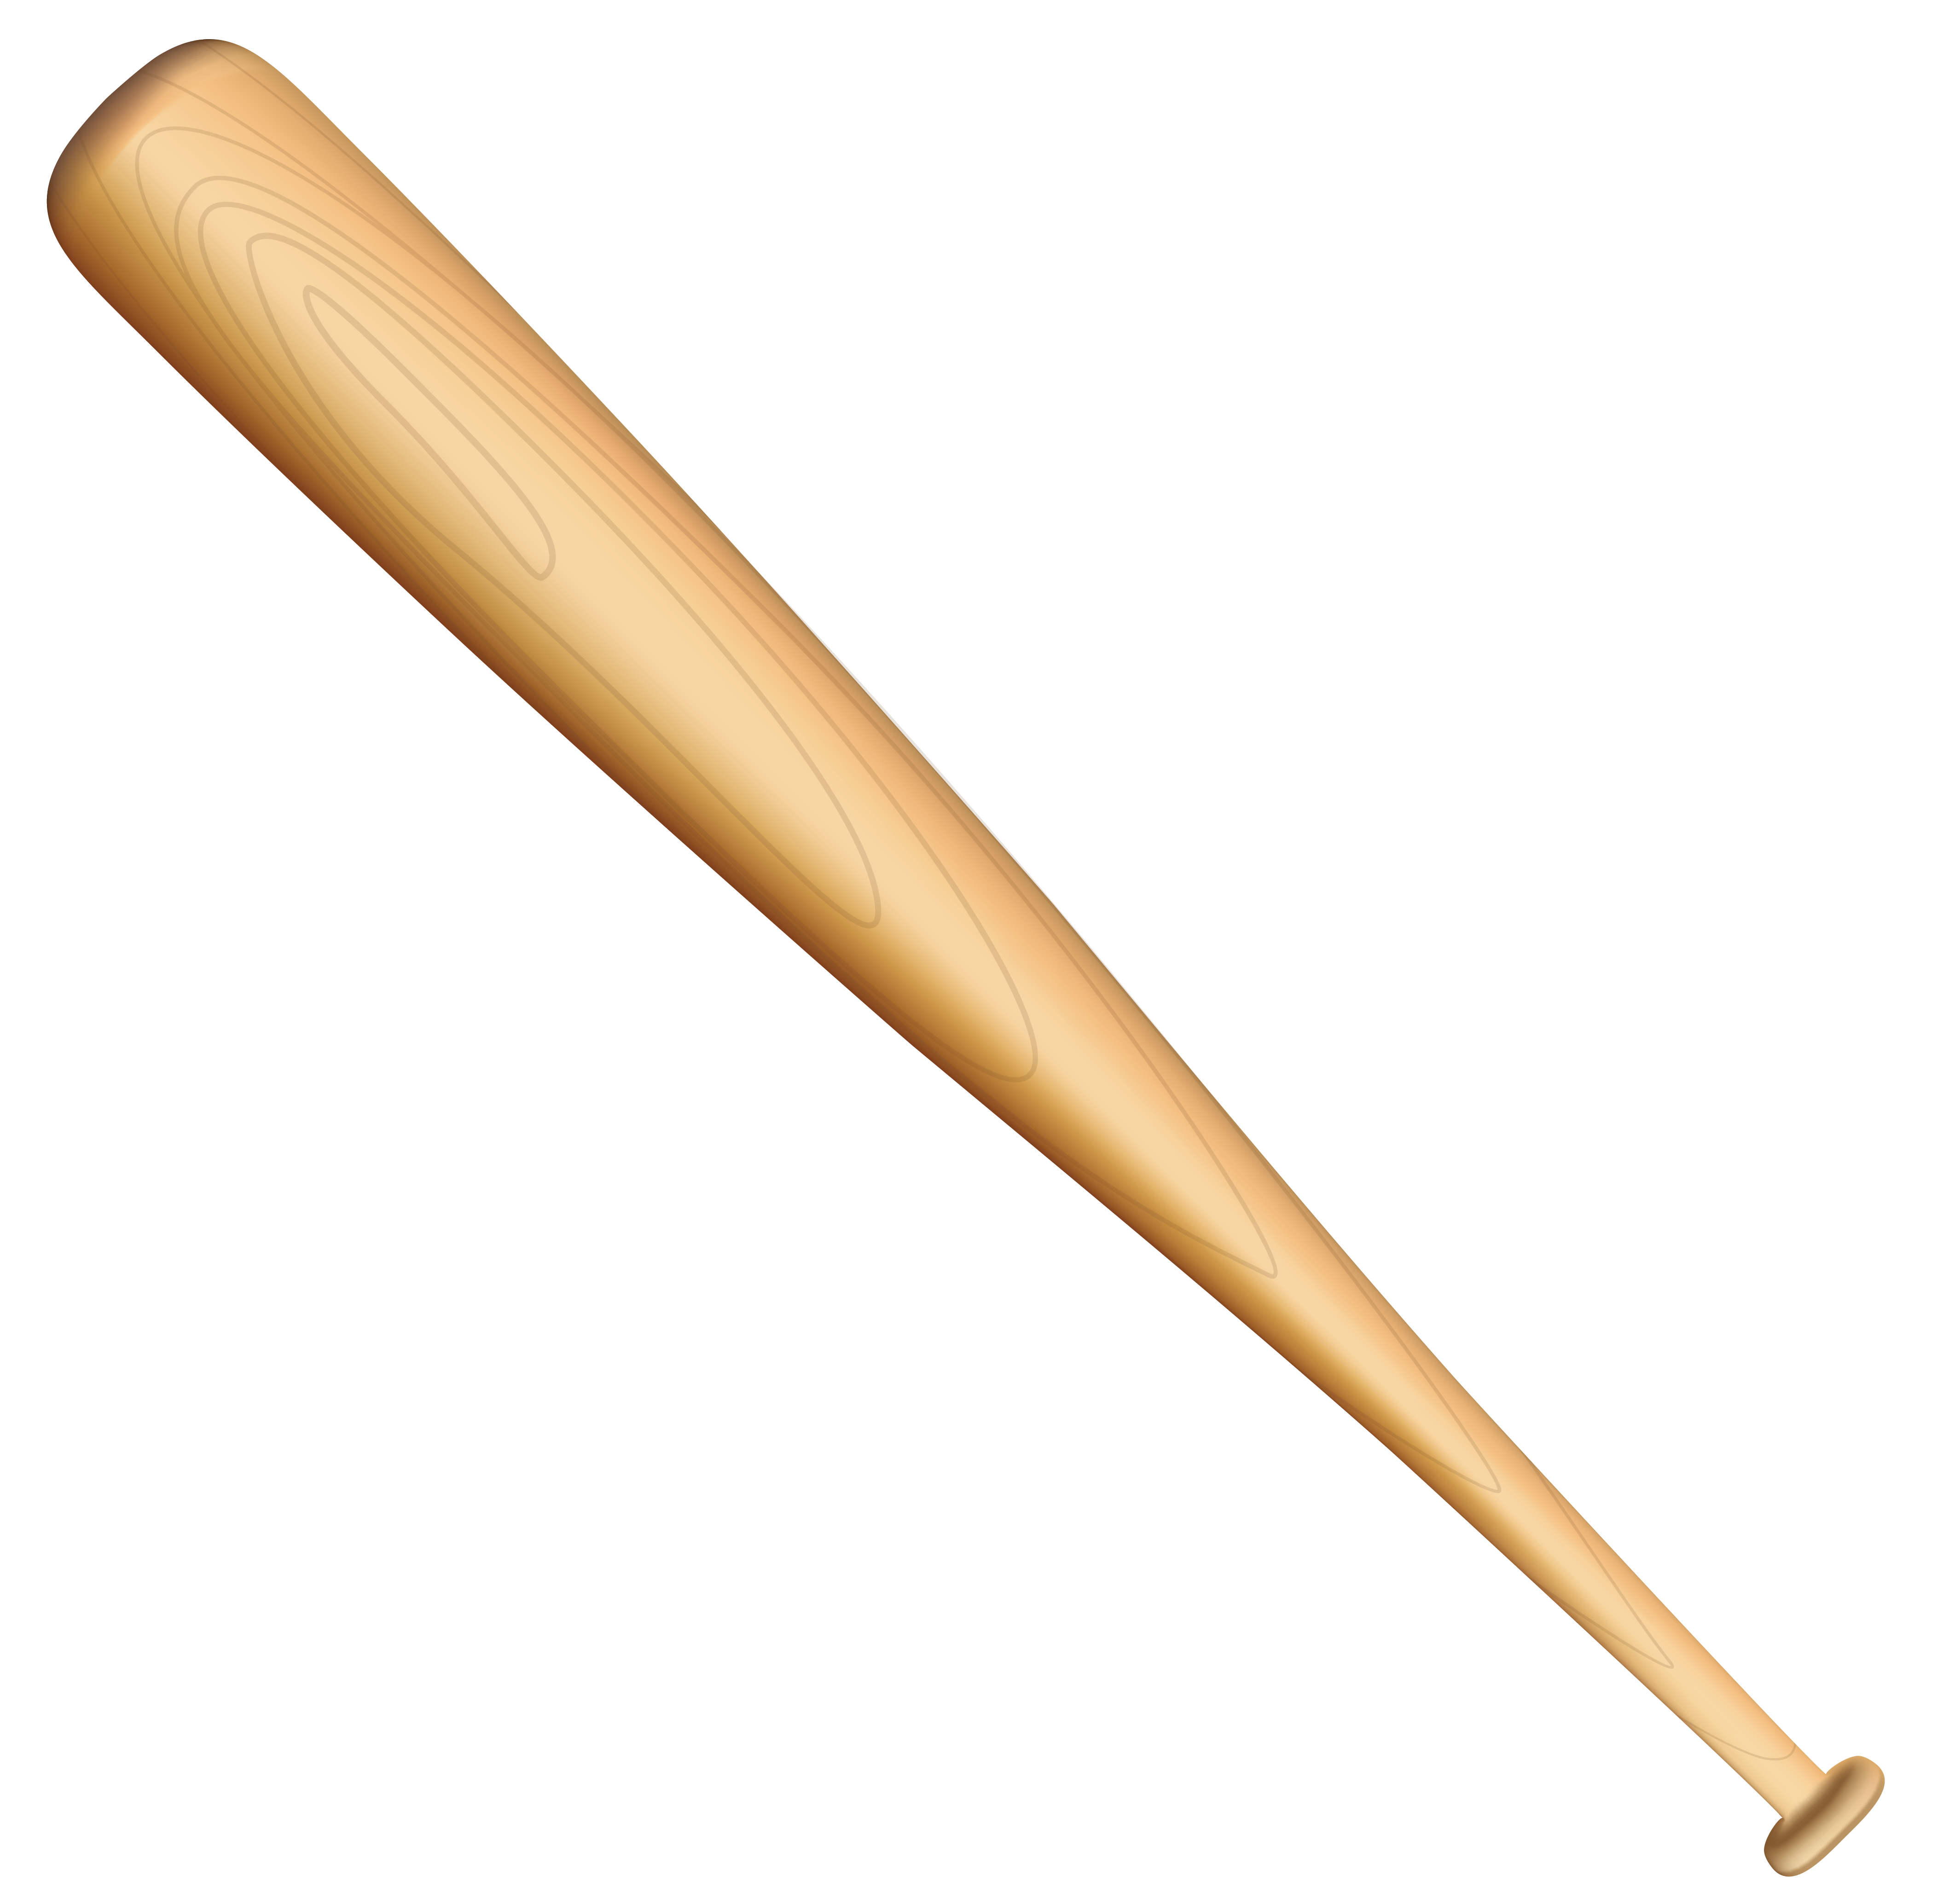 Baseball bat Ball game - Baseball Bat PNG Clipart Picture ...